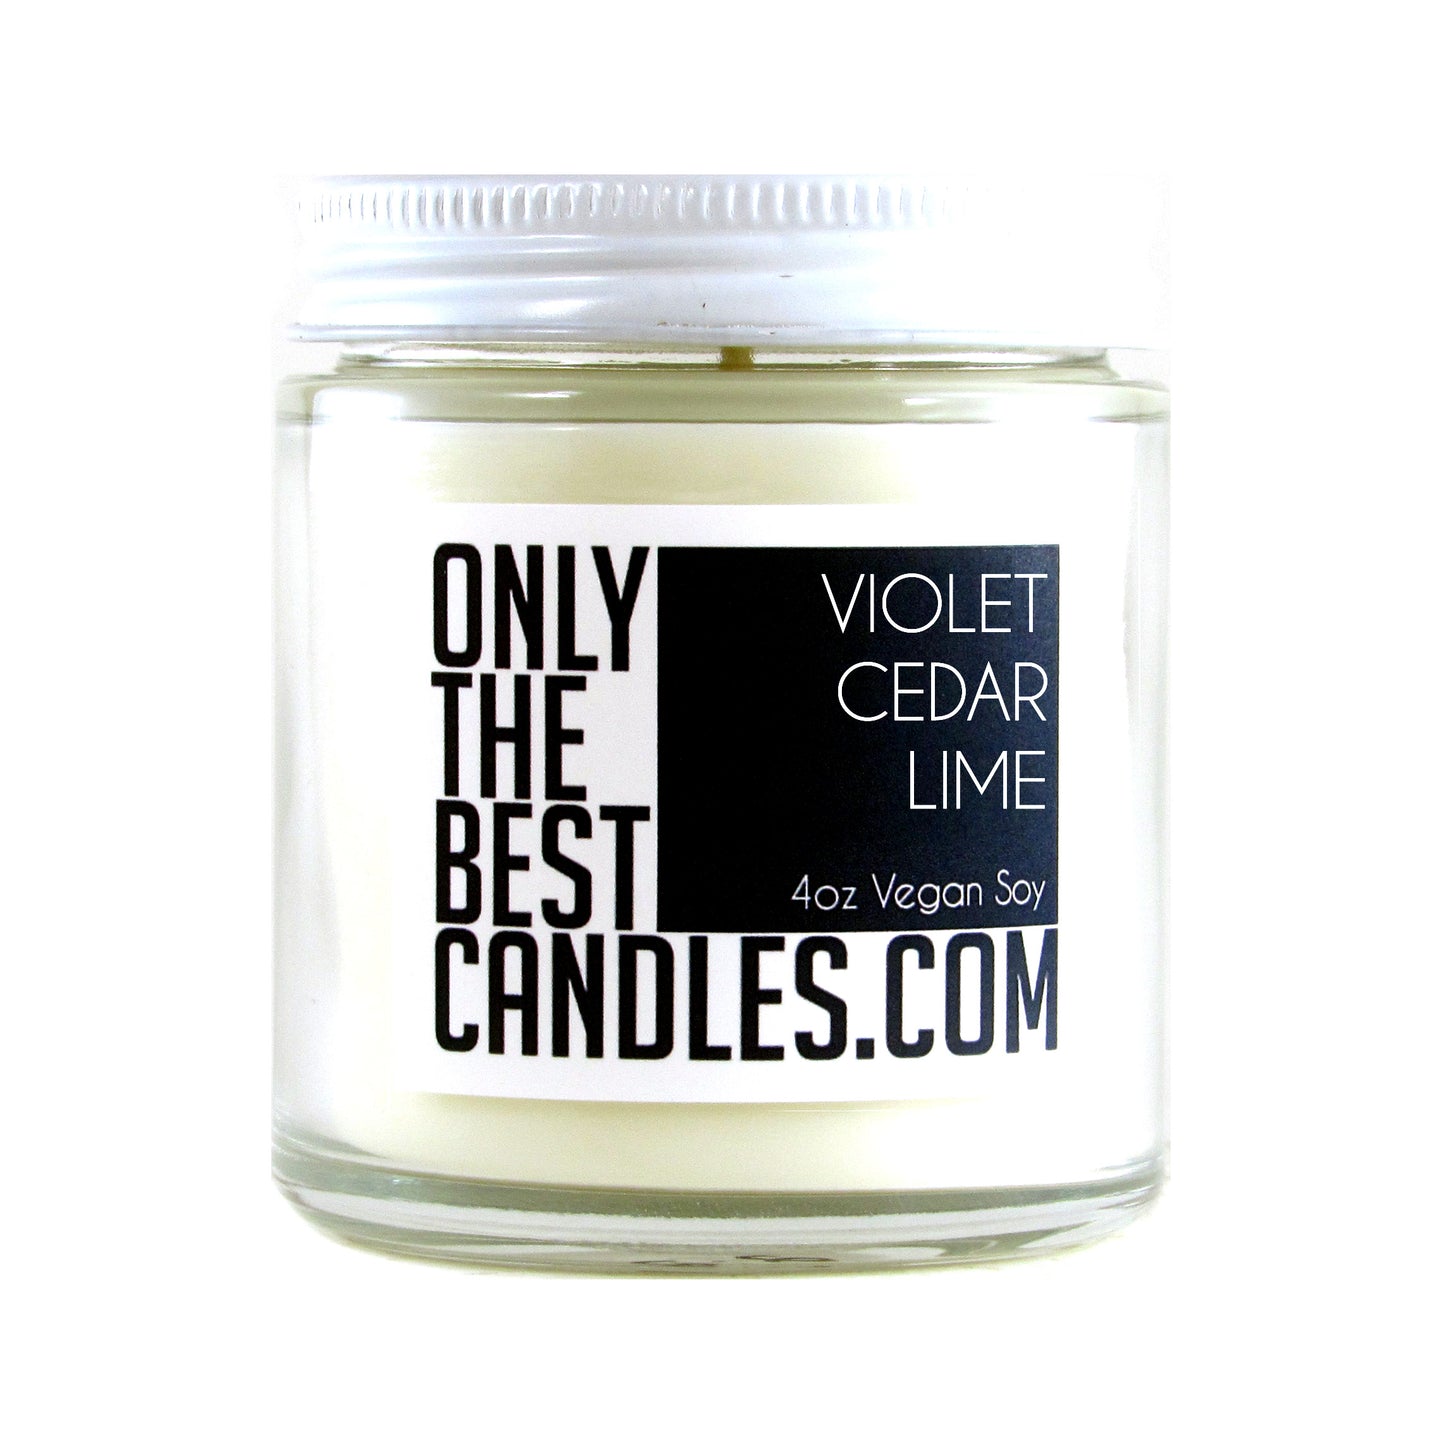 Violet Cedar Lime 4oz Candle